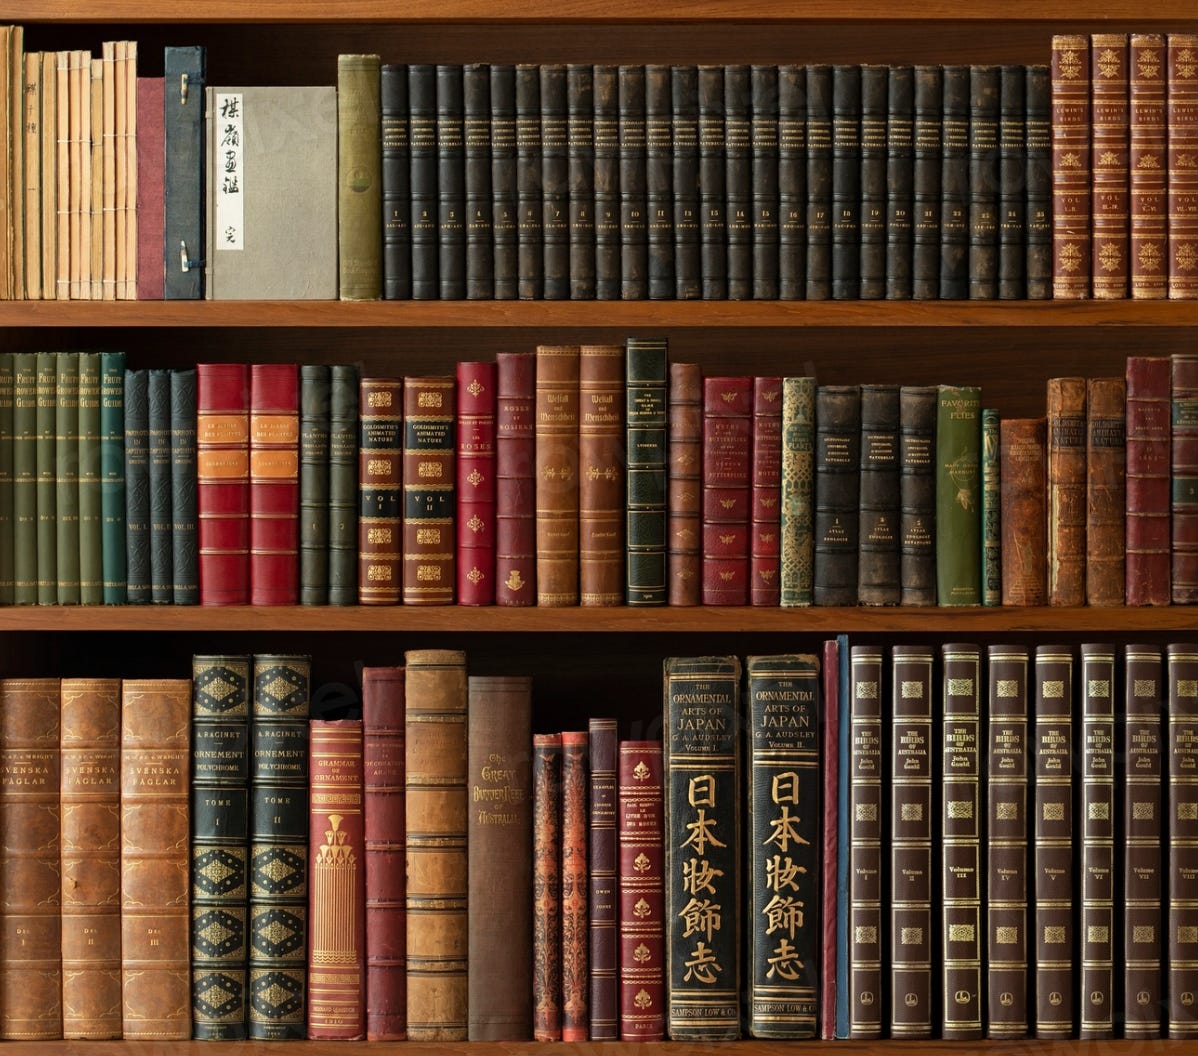 A shelf full of books

Description automatically generated